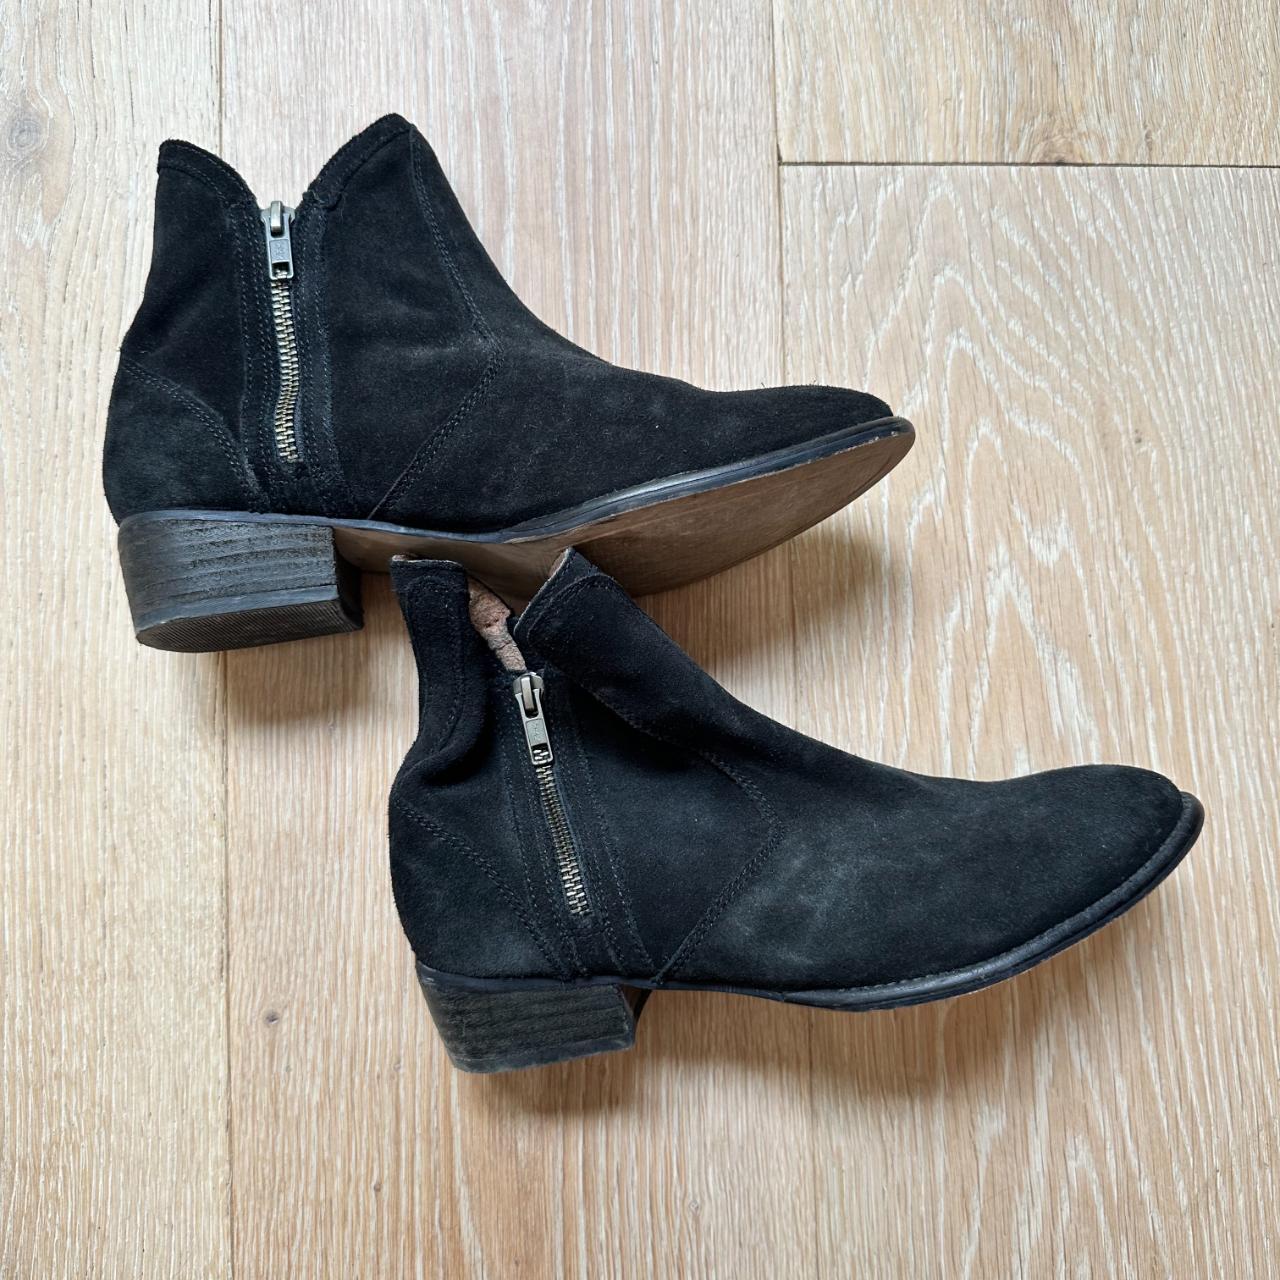 Black Leather Seychelles Boots - Size 7.5 - Lightly... - Depop